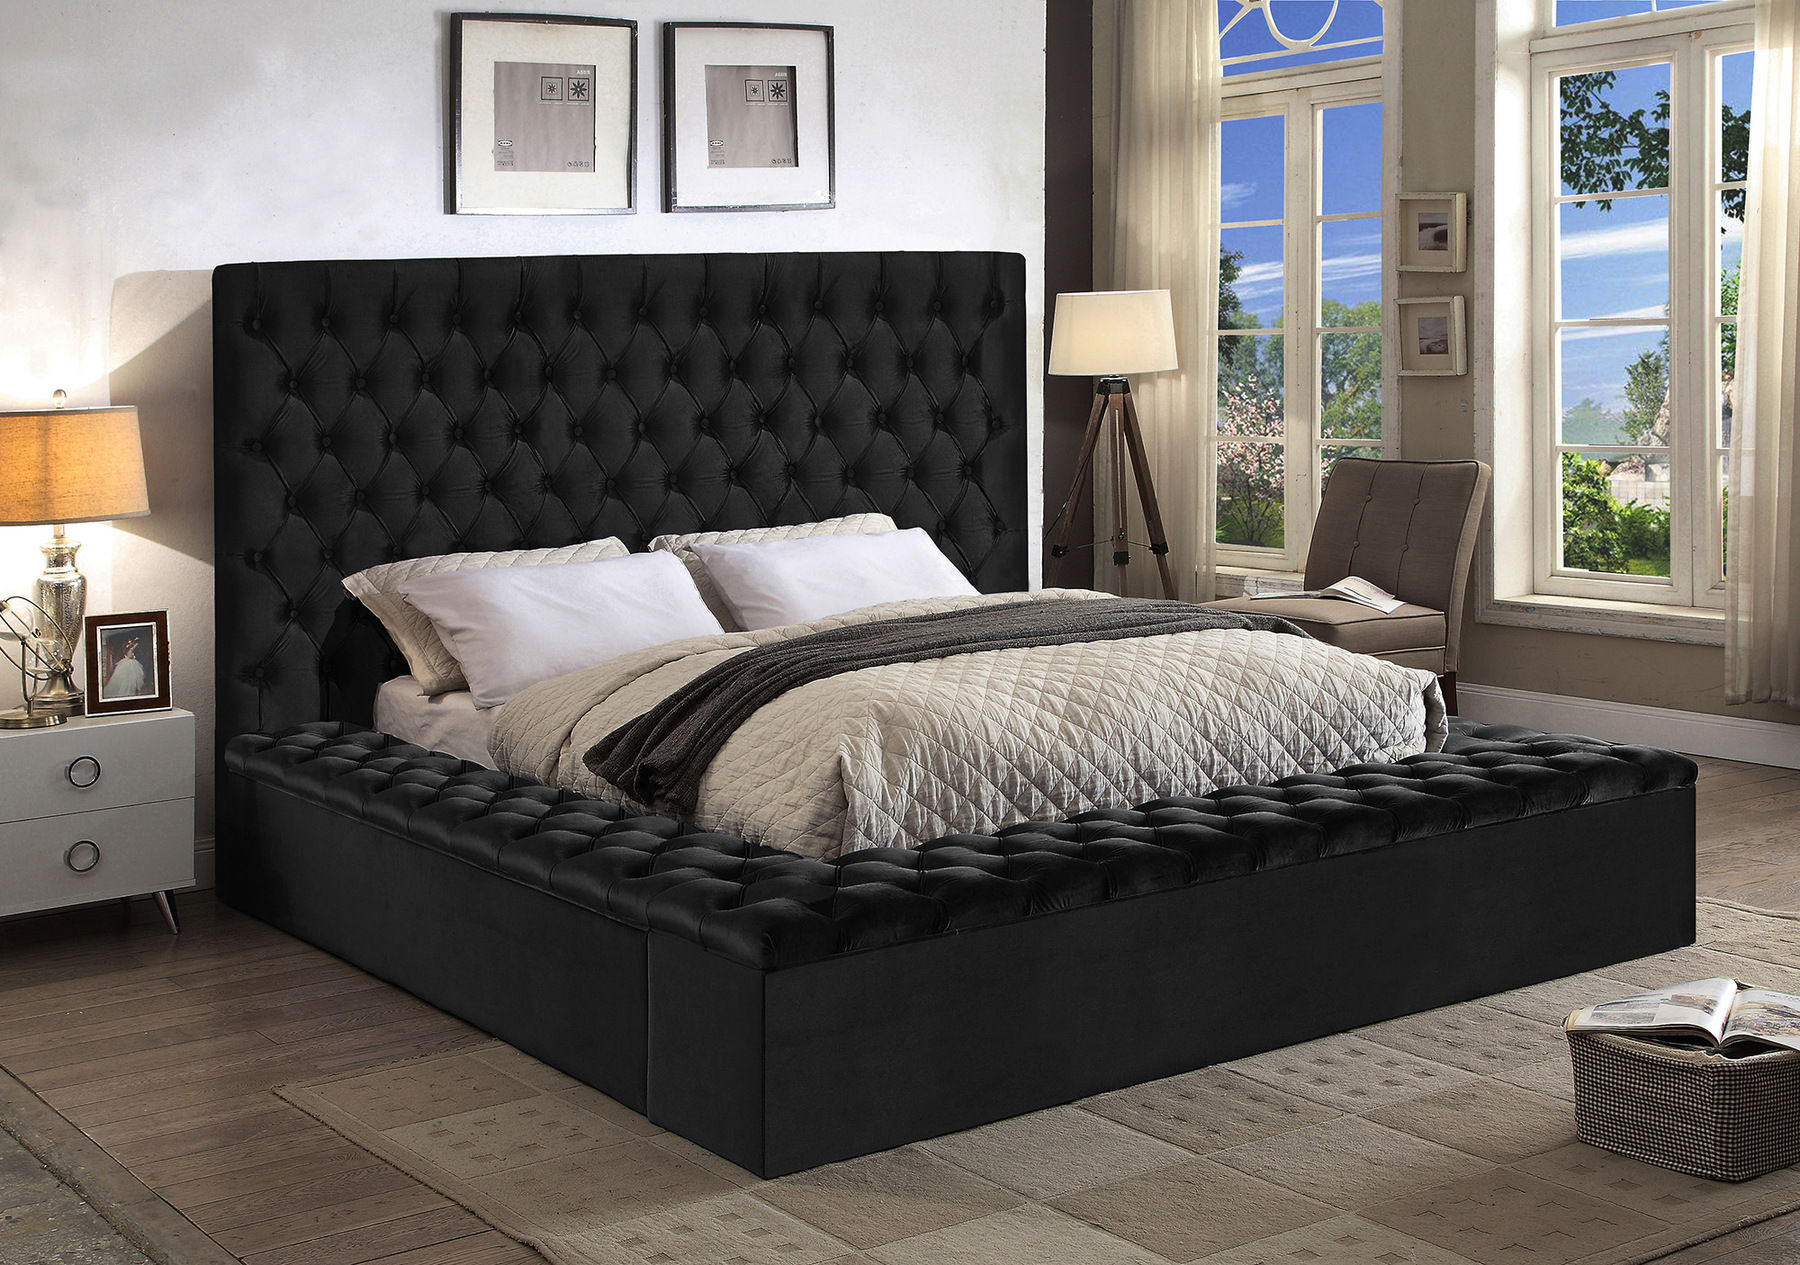 Bliss Black King Size Bed bliss Meridian Furniture King 